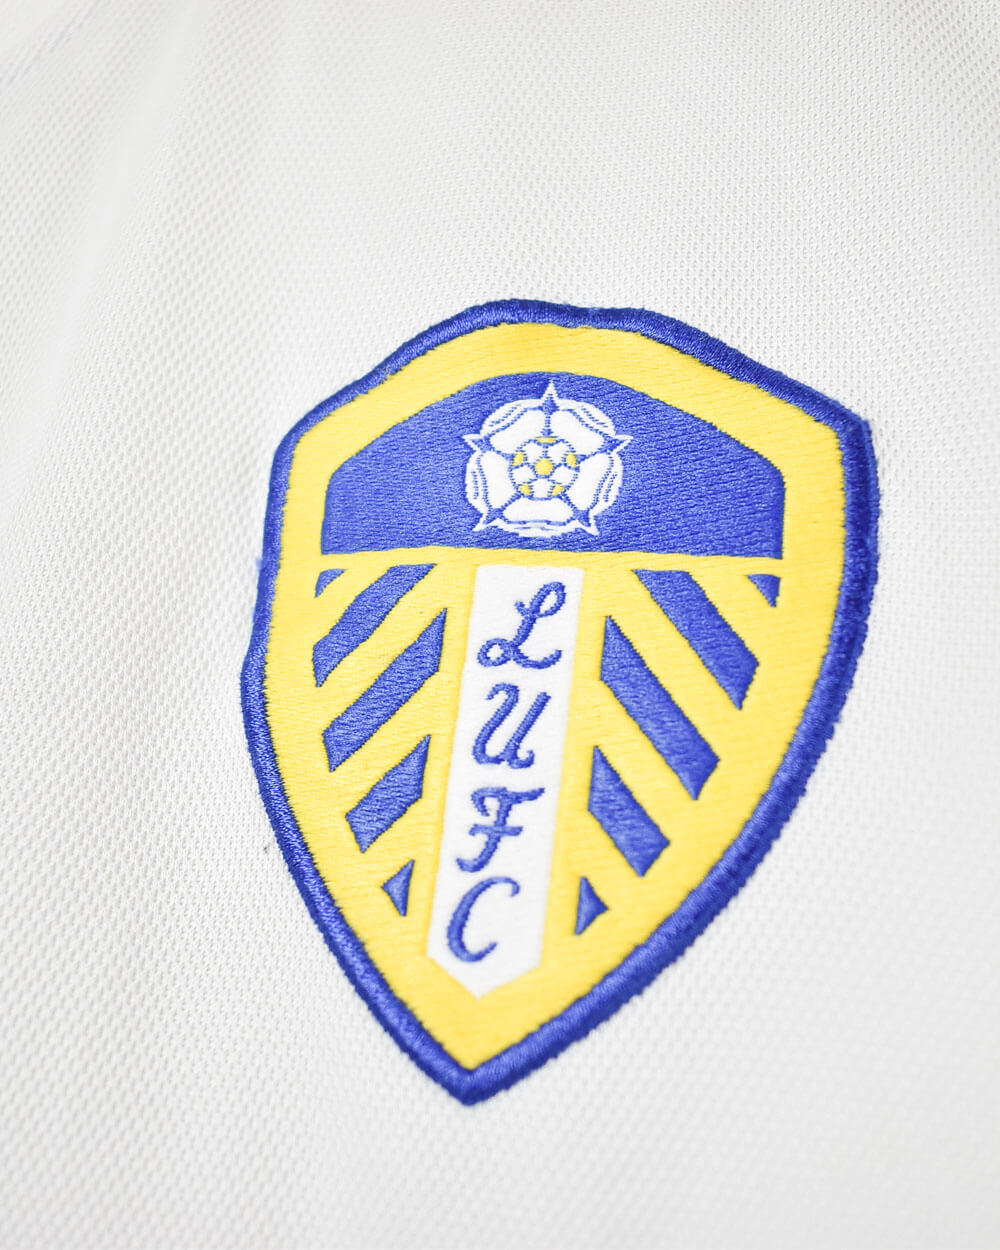 White Nike Leeds 2000/01 Home Football Shirt - XX-Large